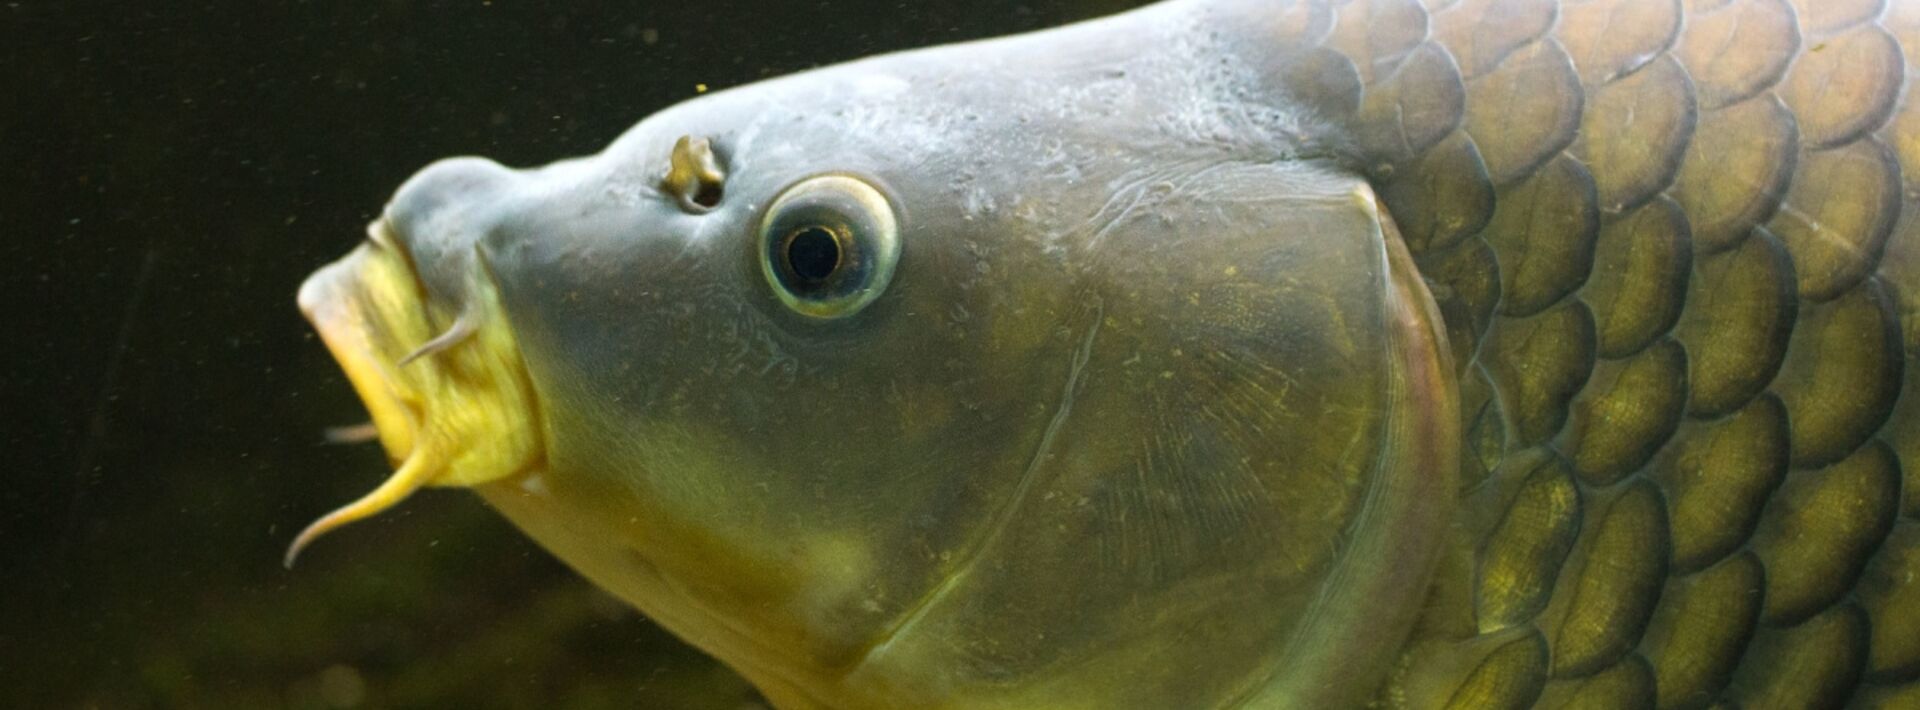 A close up of a fish 